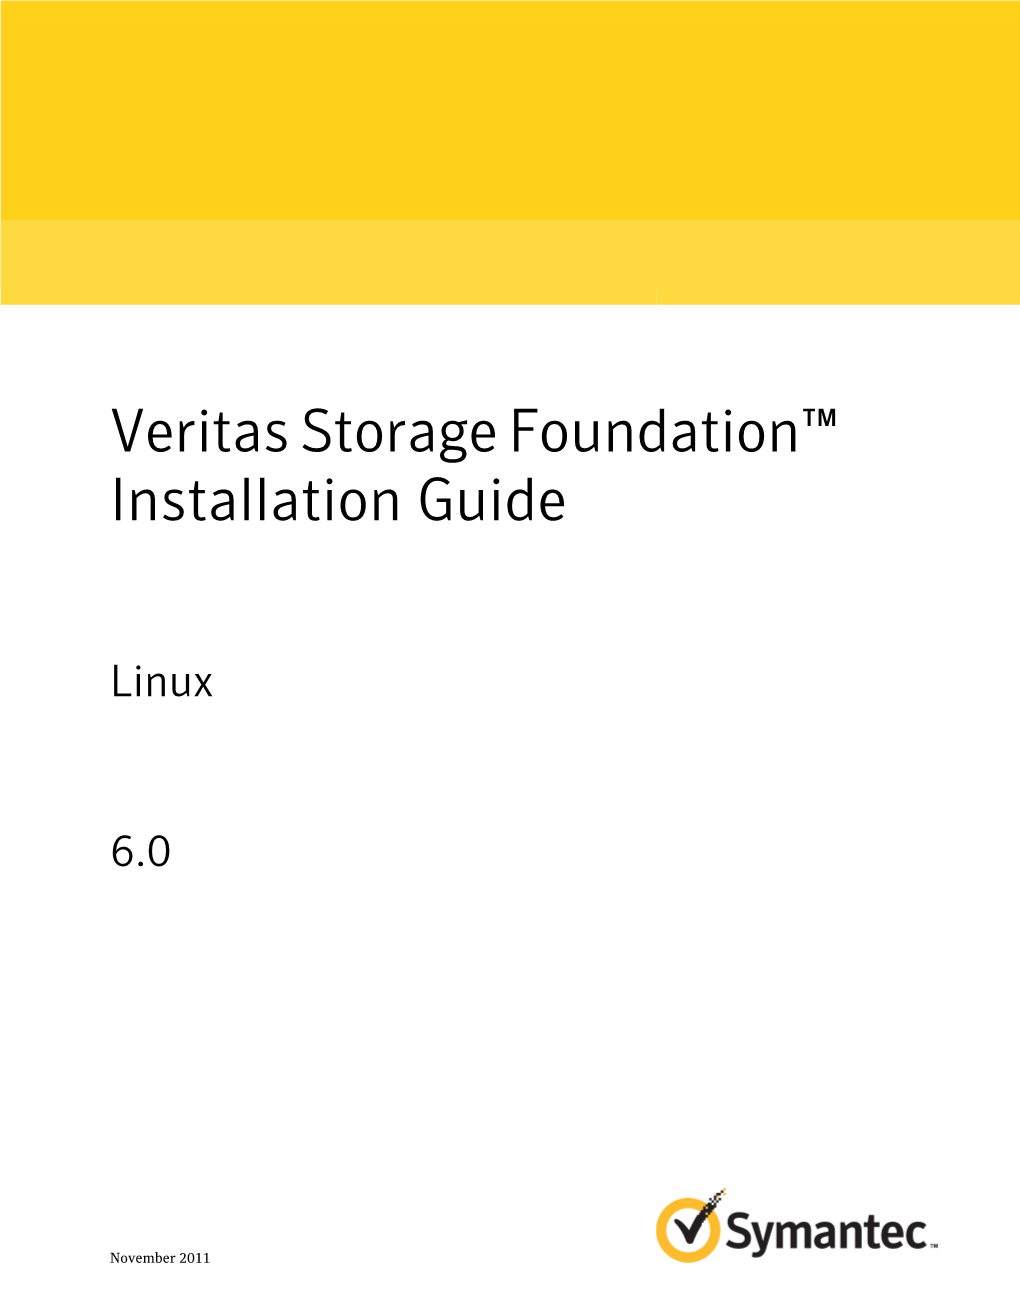 Veritas Storage Foundation™ Installation Guide: Linux